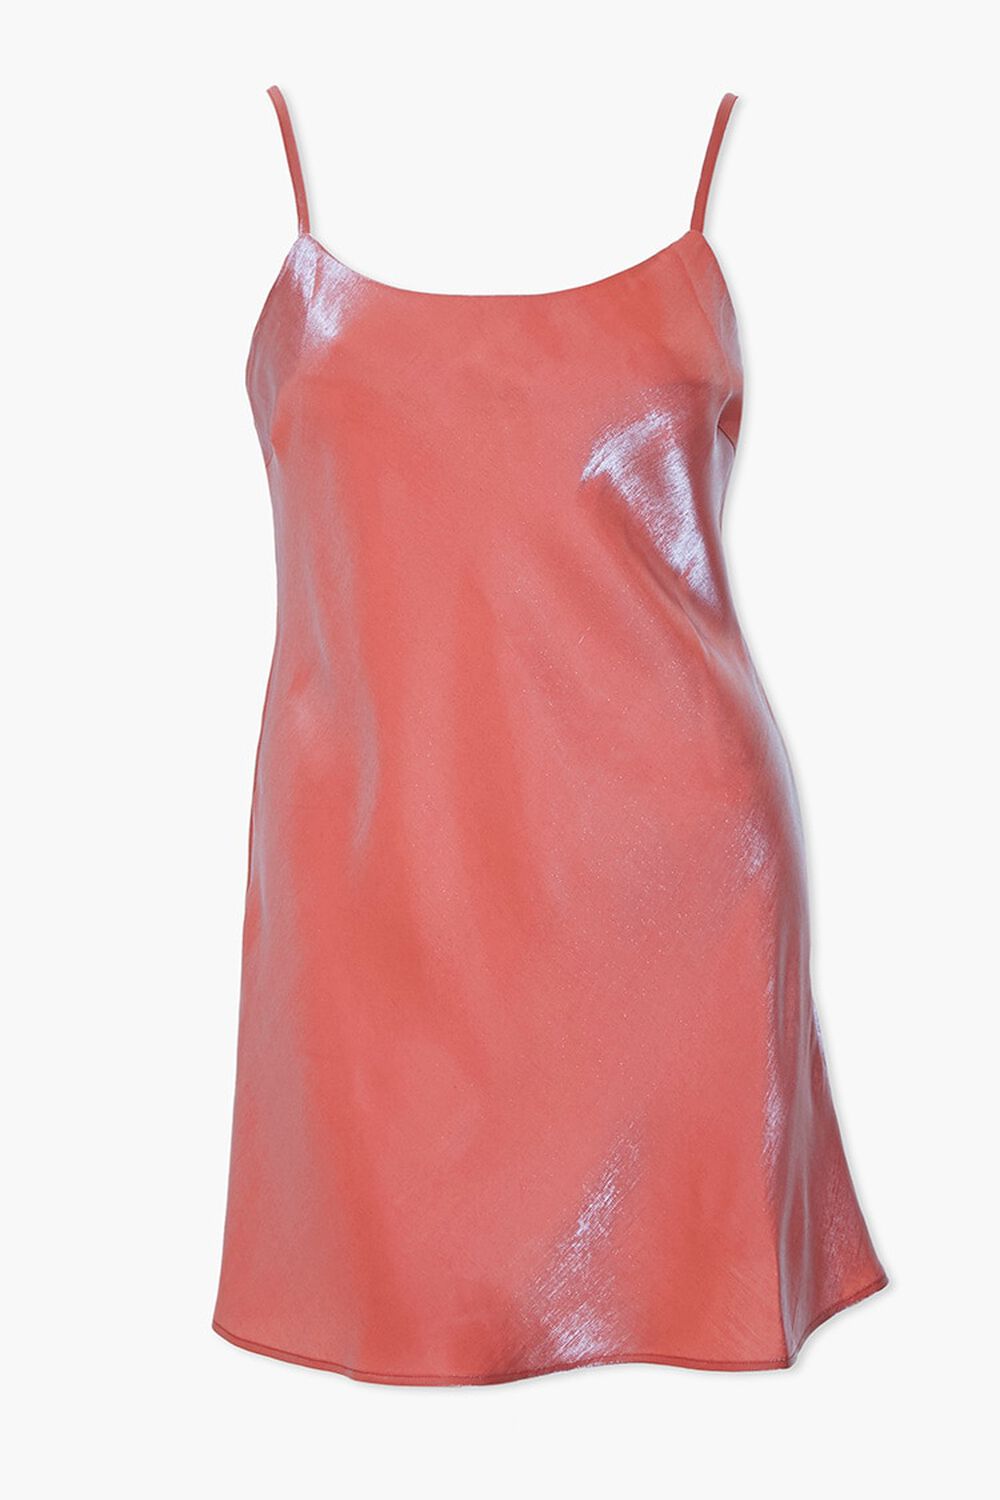 ROSE Plus Size Satin Cami Dress, image 1